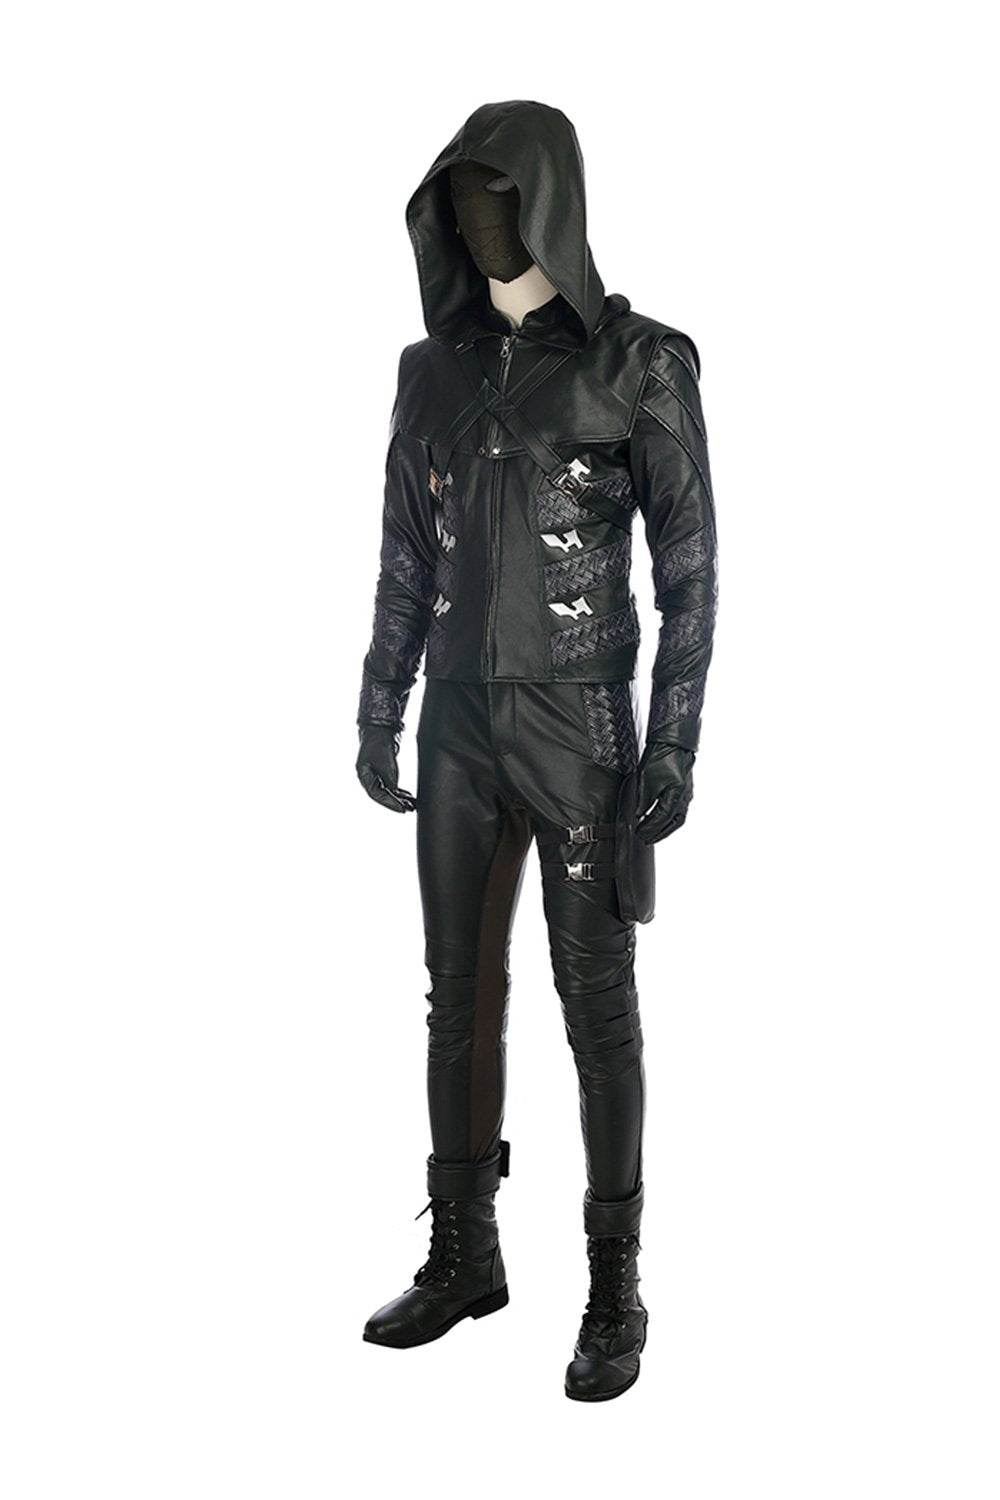 Arrow Season 5 Adrian Chase Prometheus Outfit Cosplay Costume